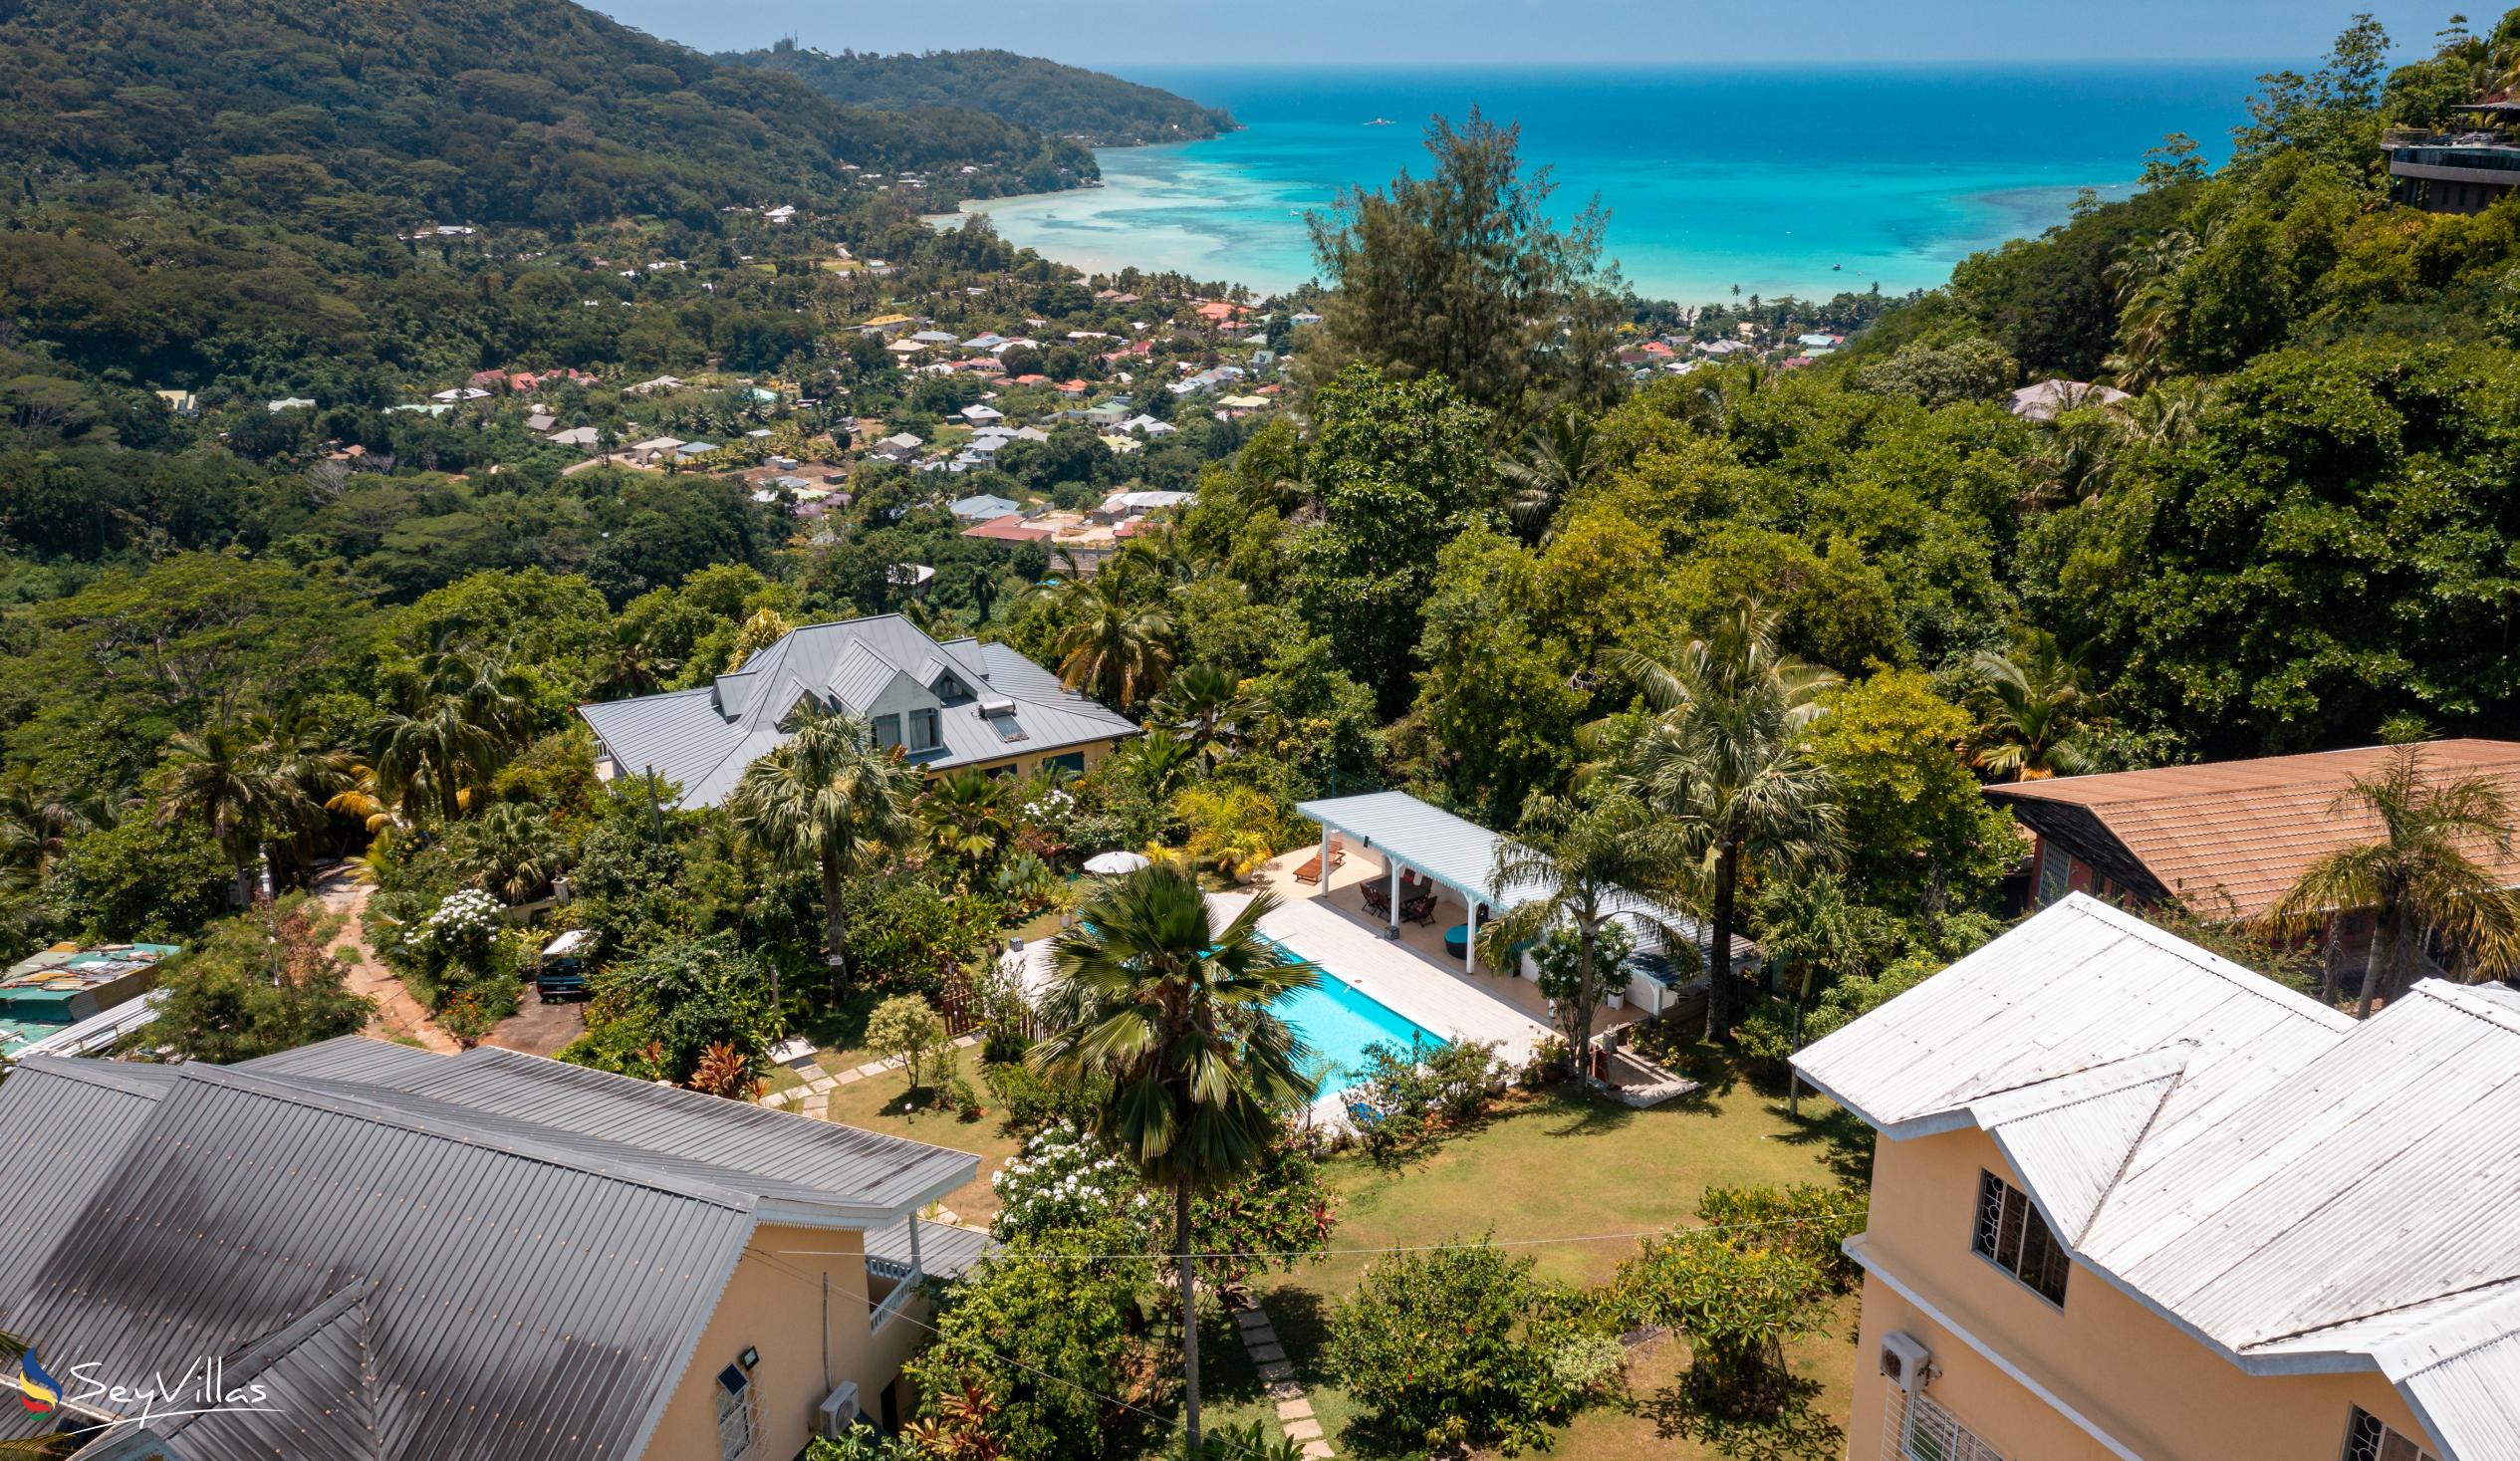 Photo 5: Residence Monte Cristo - Outdoor area - Mahé (Seychelles)